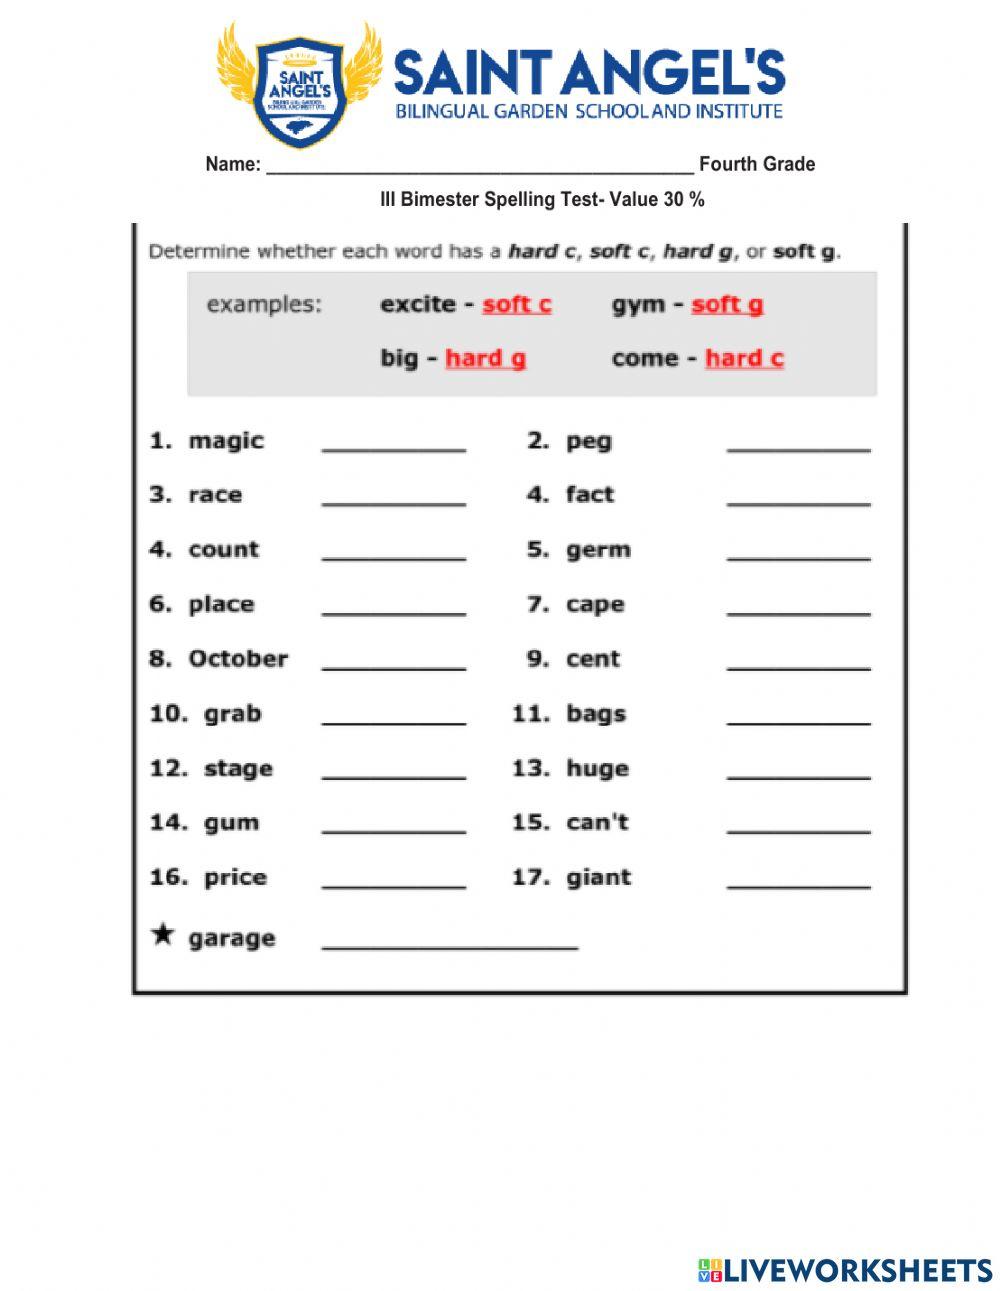 Spelling 4 test IIIq